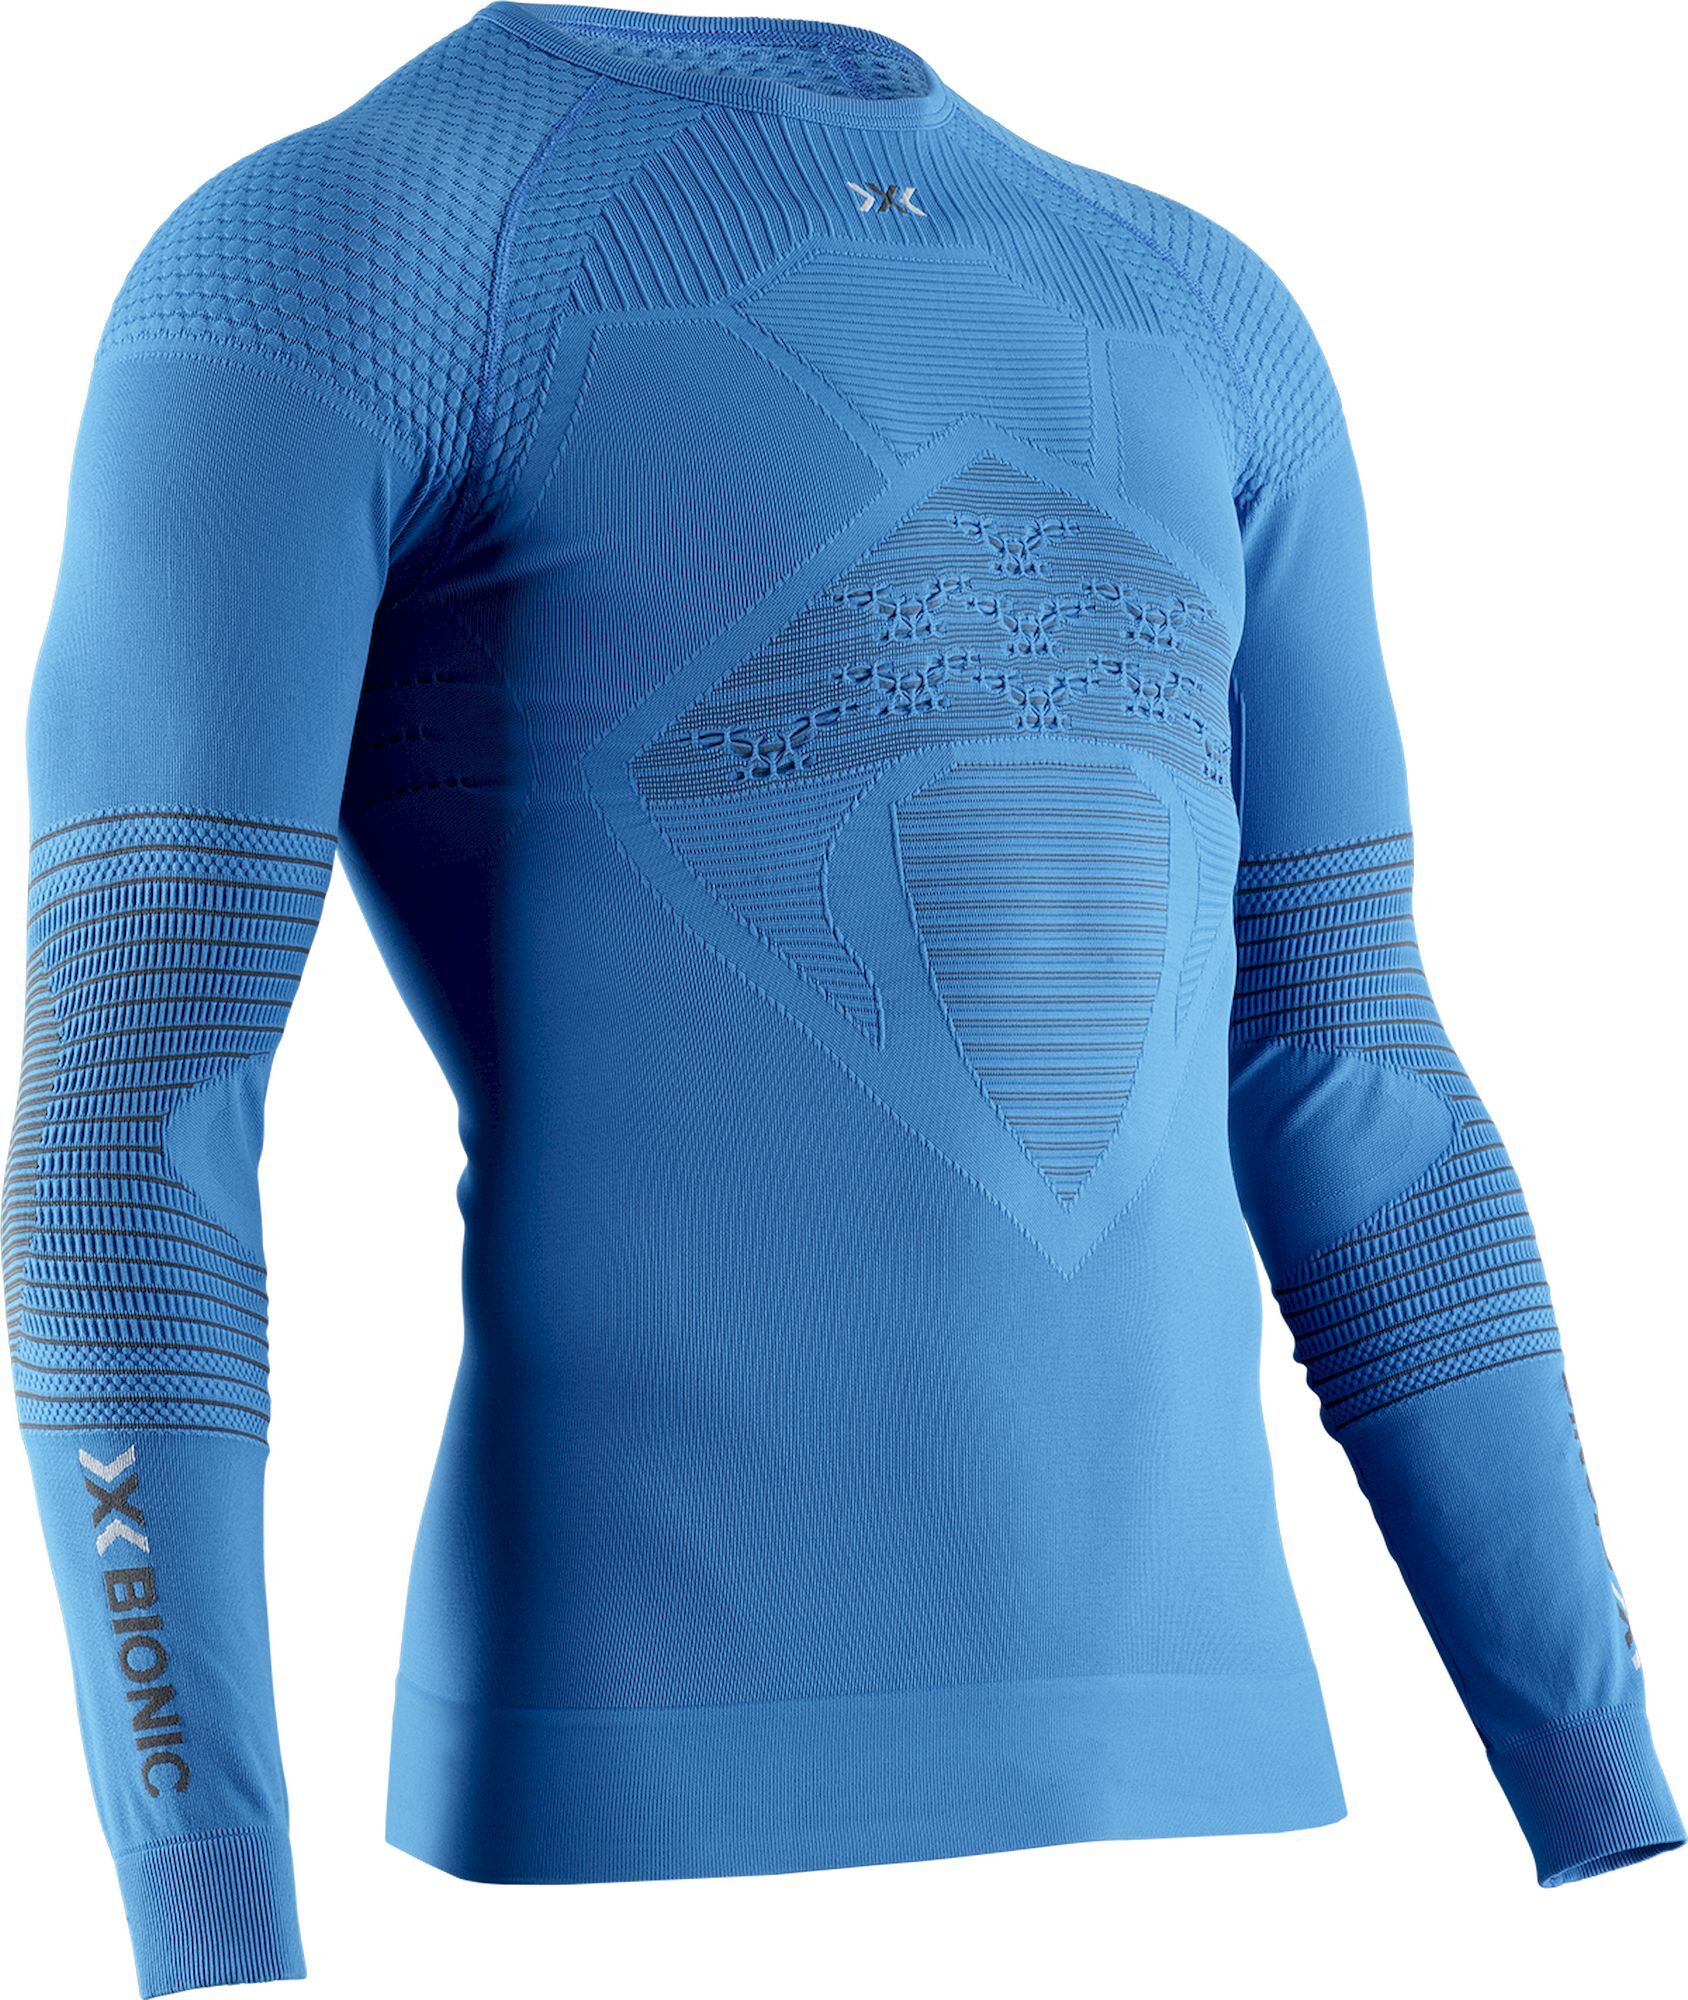 X-Bionic Energizer 4.0 Shirt Long Sleeve - Ropa interior - Hombre